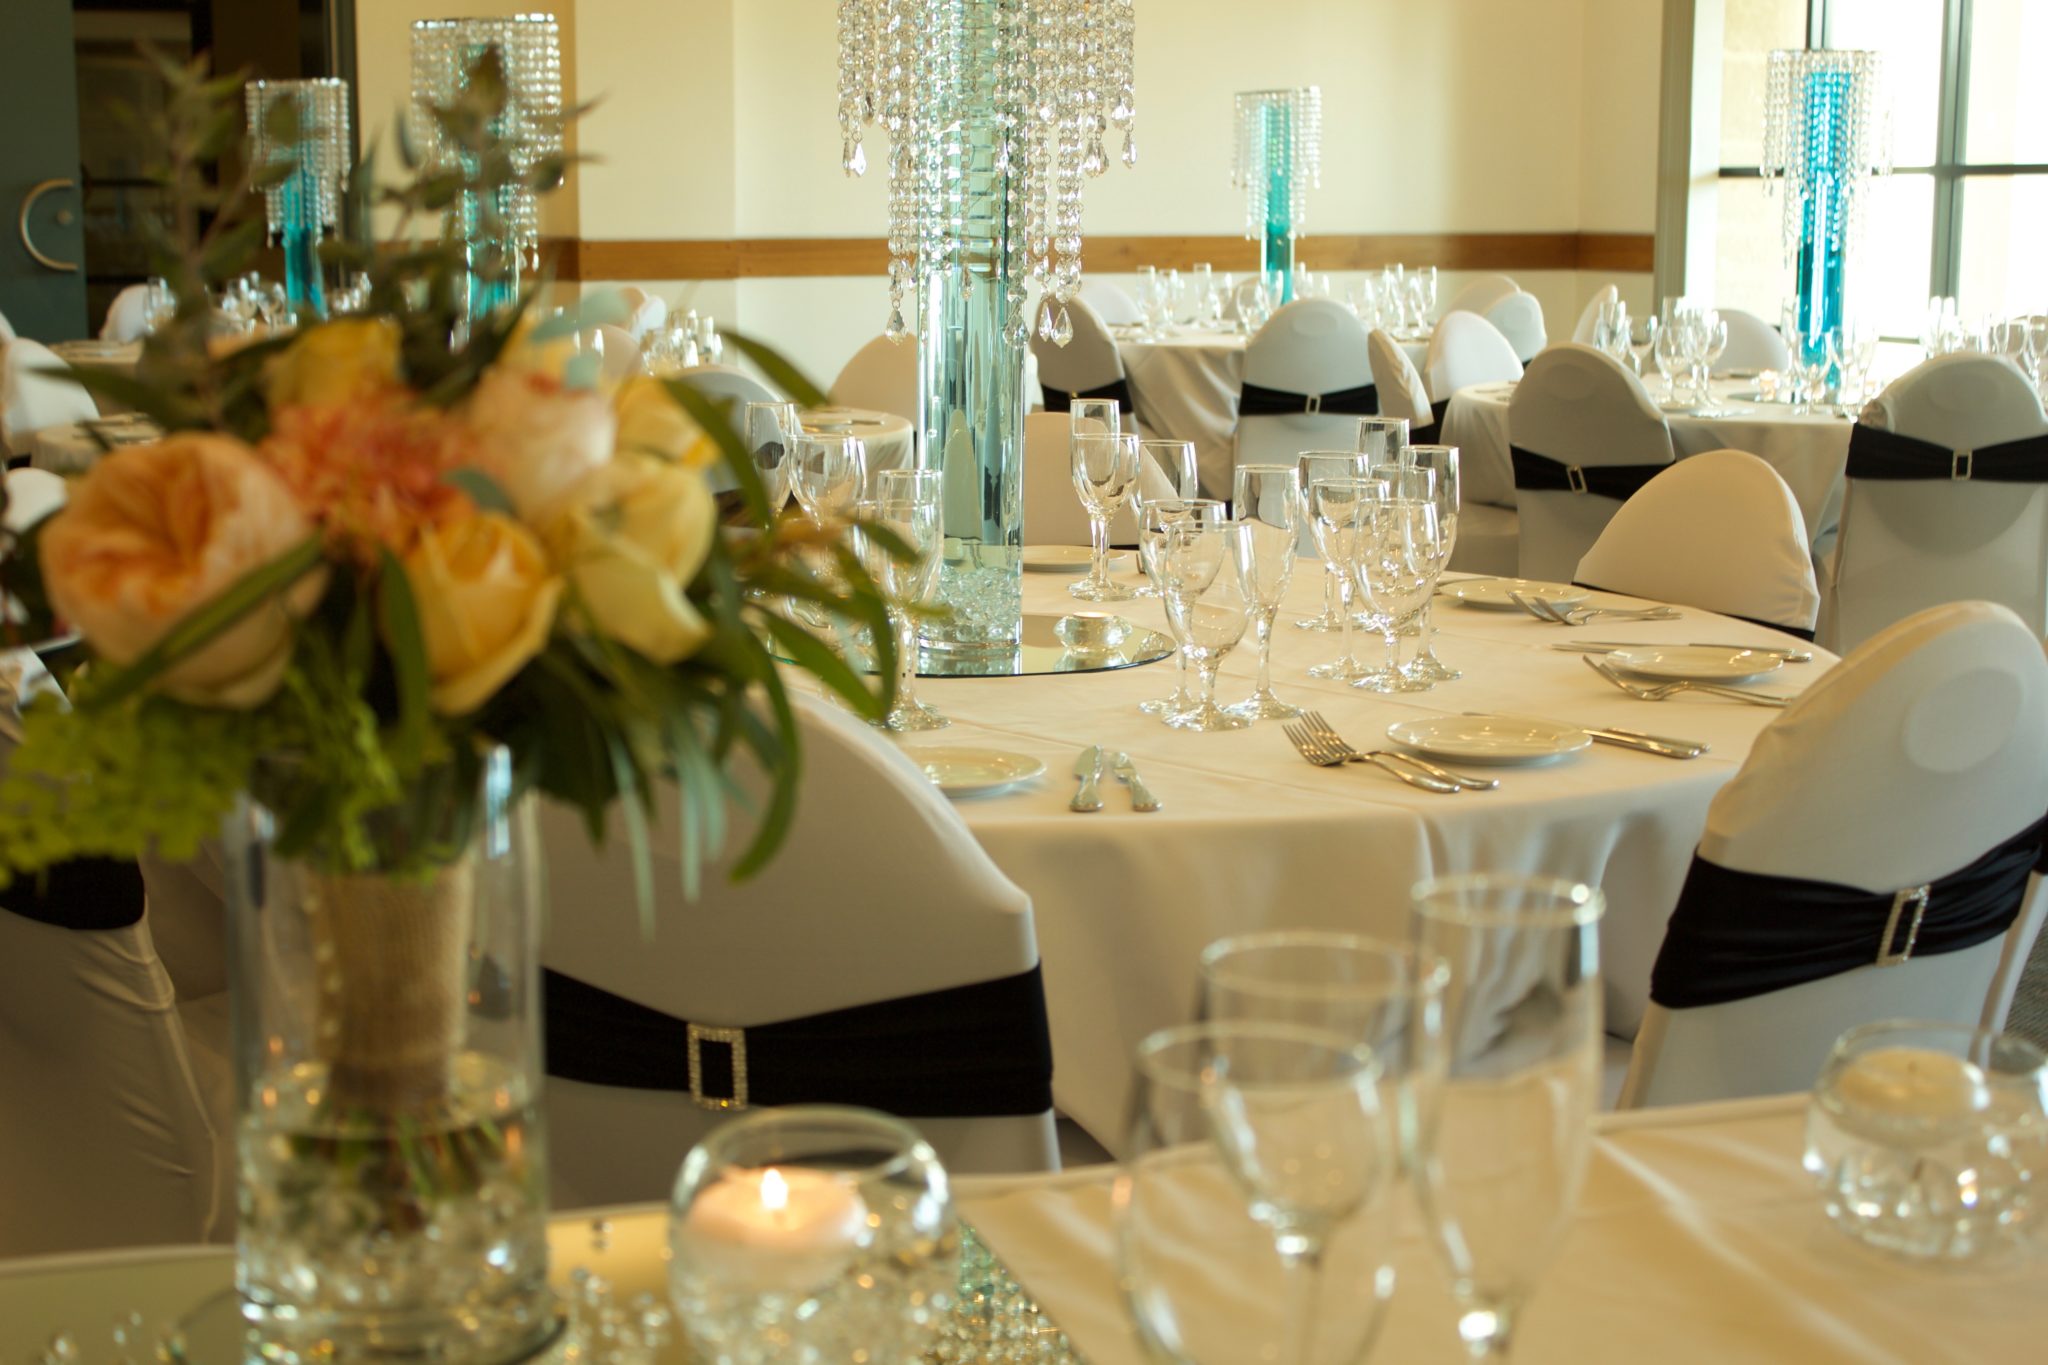 Wedding venue catering - CREATIVE CATERING PERTH